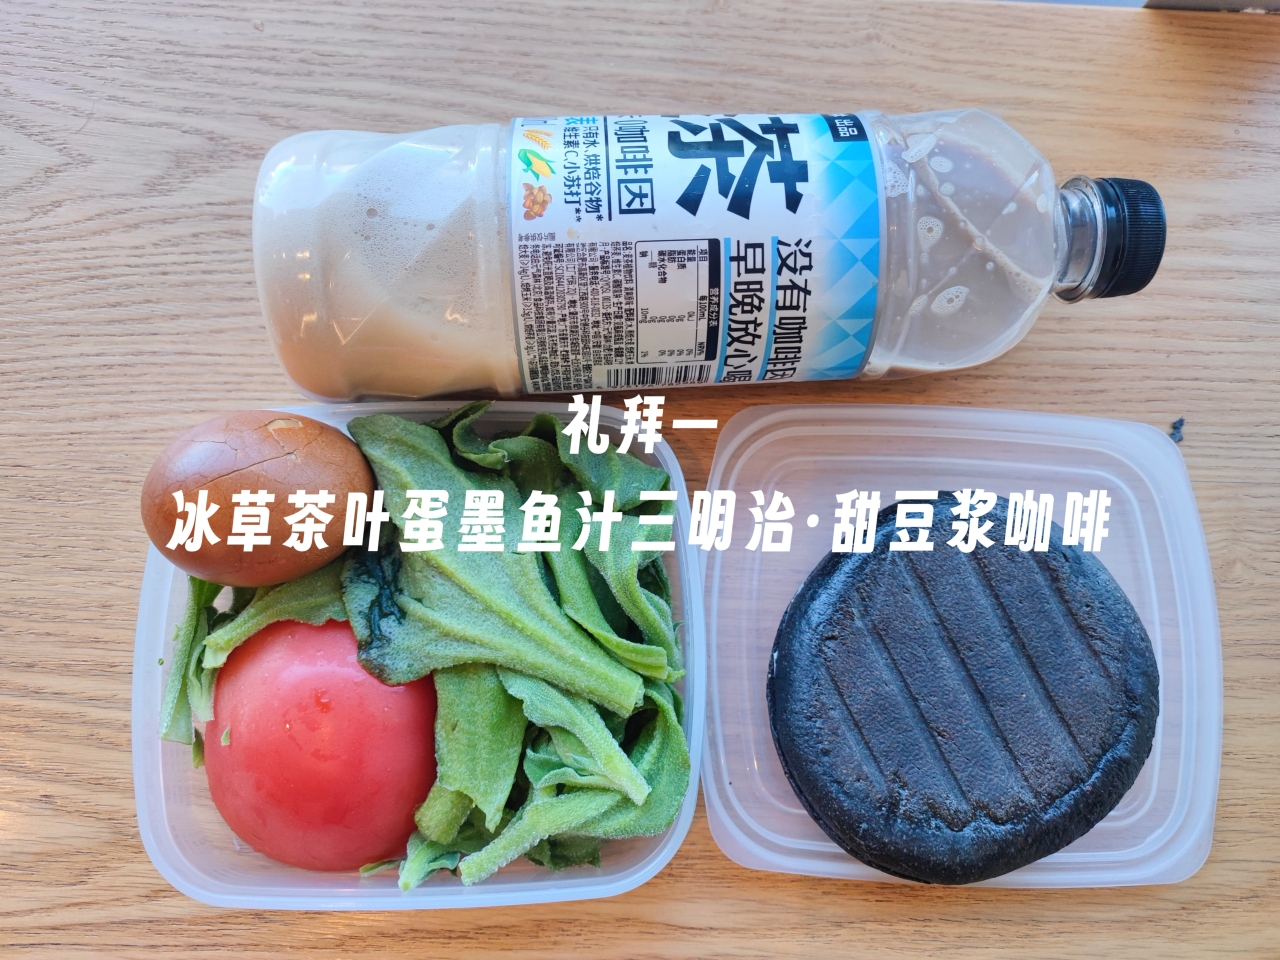 墨鱼汁小软包•黑色食物集(1)Cuttlefish Ink Black Bread•Black Colored Foods (1)